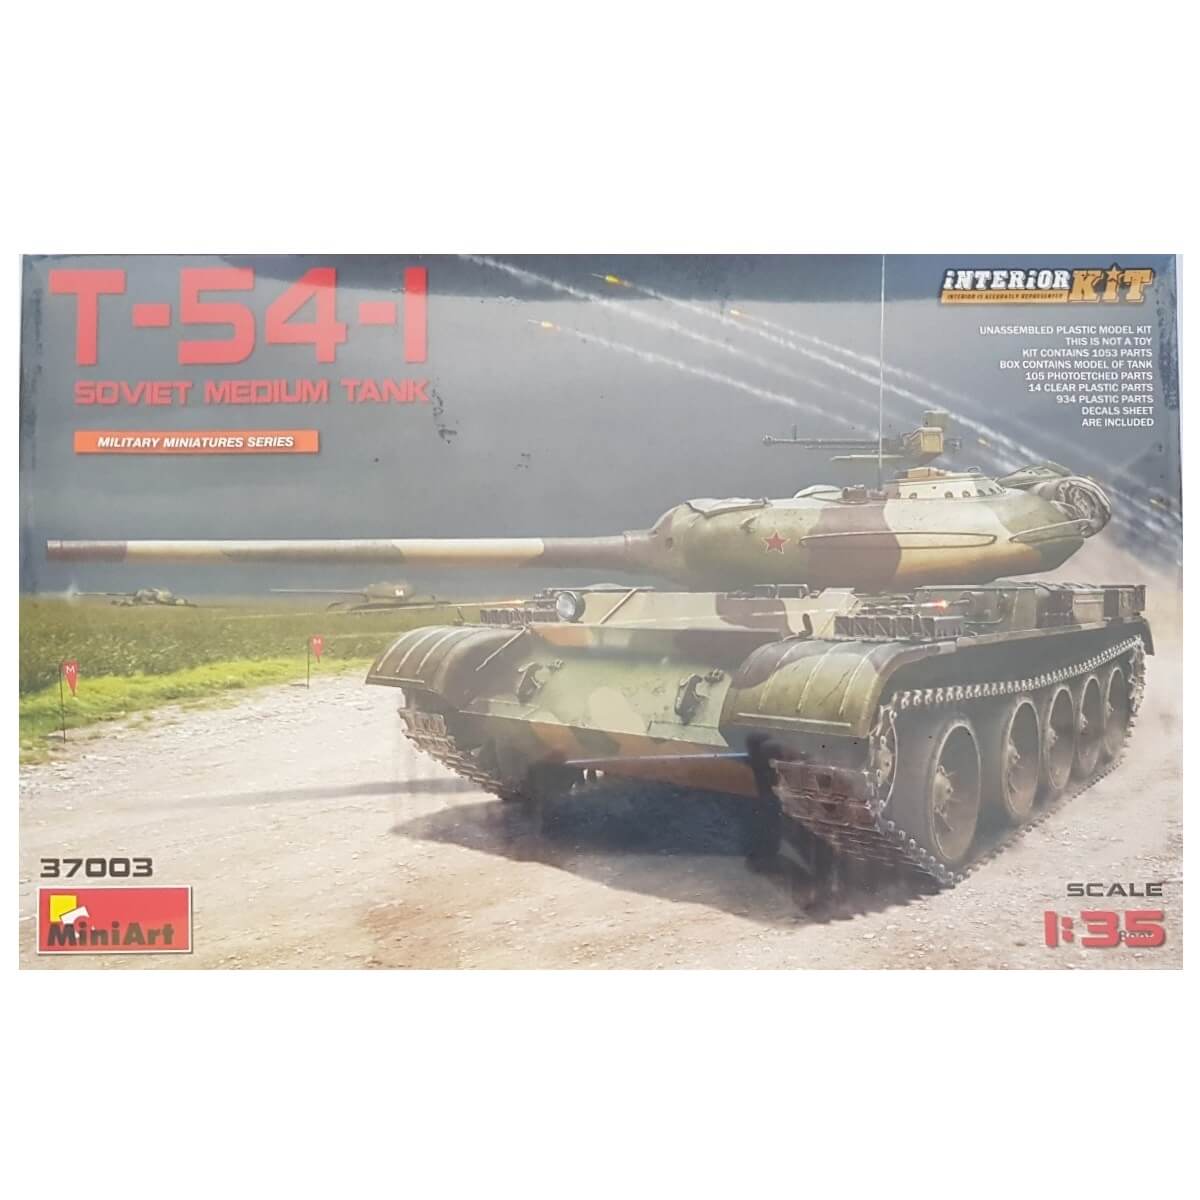 1:35 Soviet Medium Tank T-54-1 - Interior Kit - MINIART